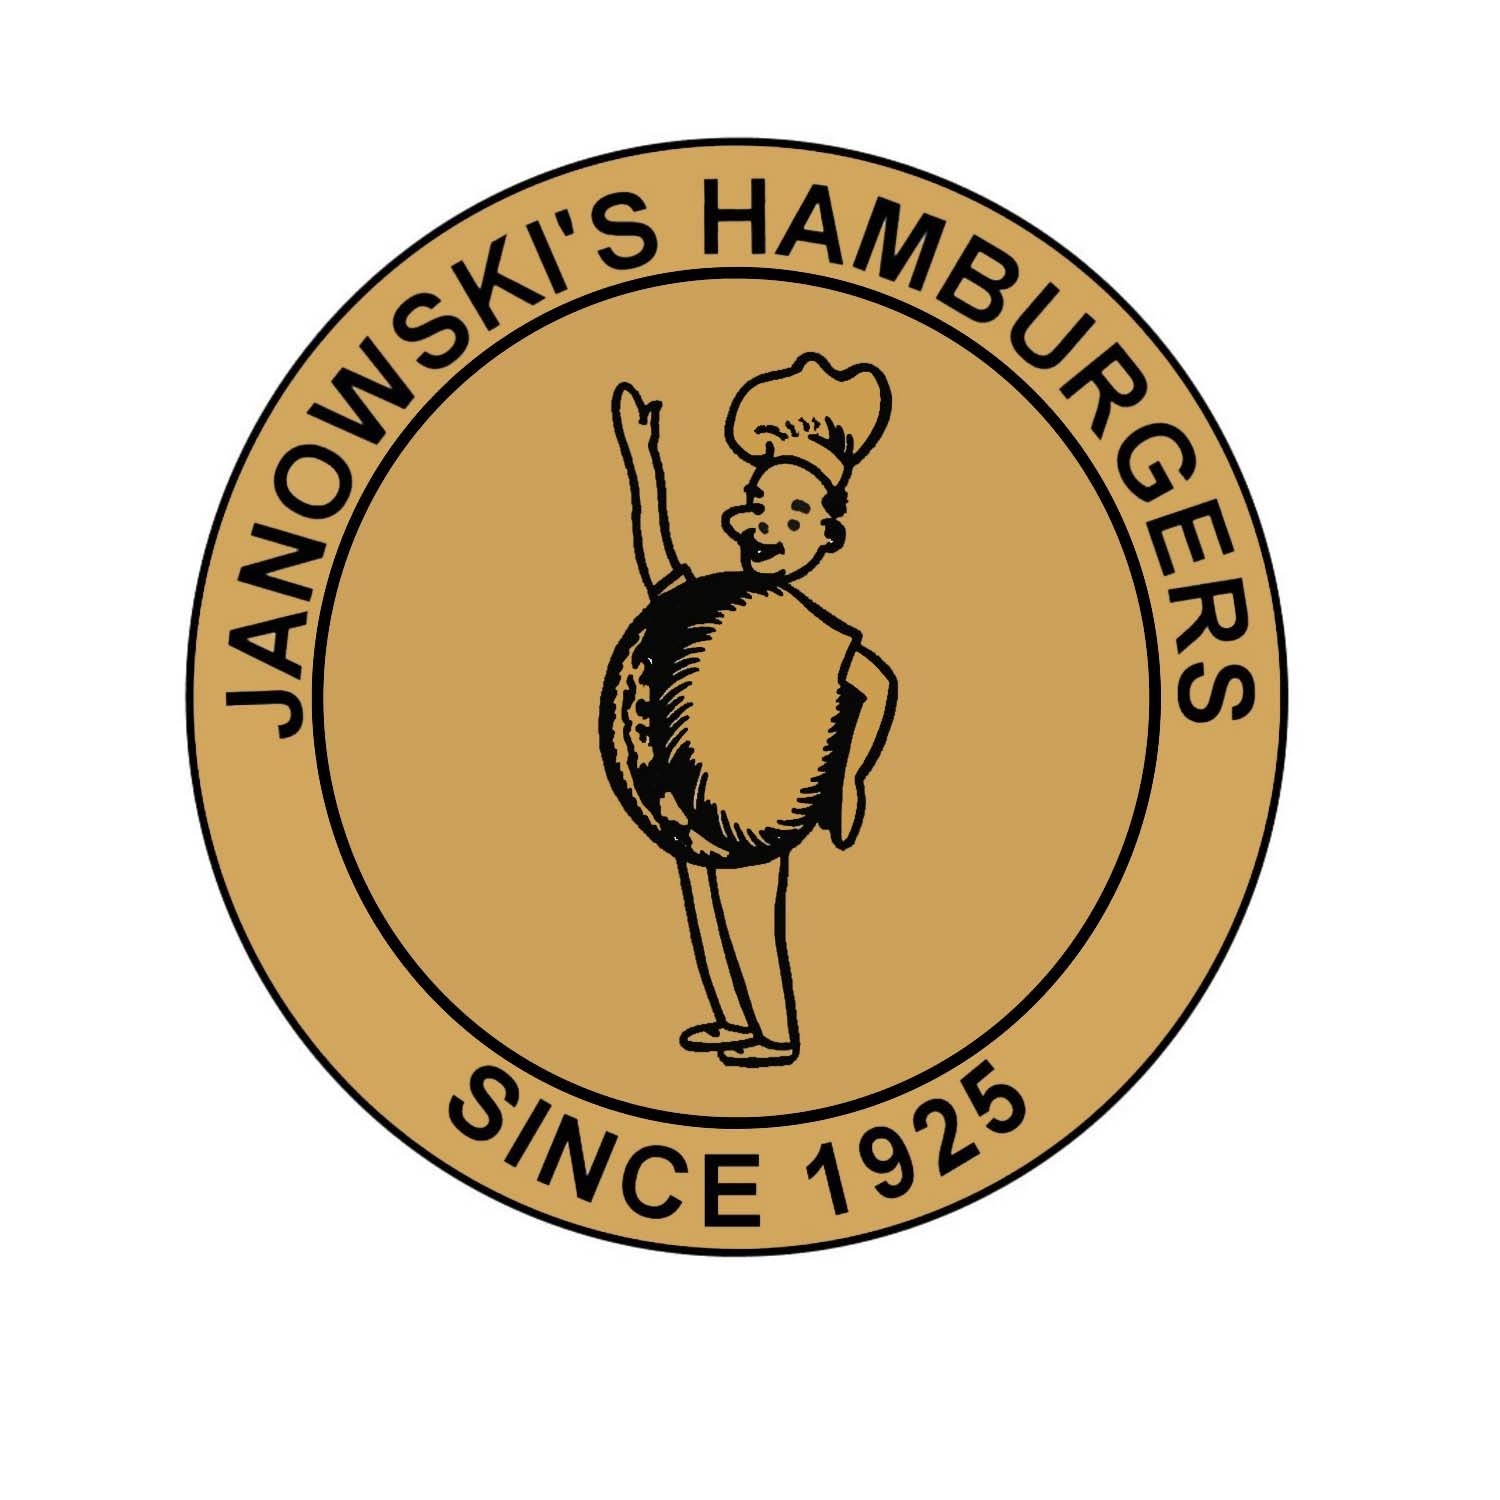 Janowski's Hamburgers Inc